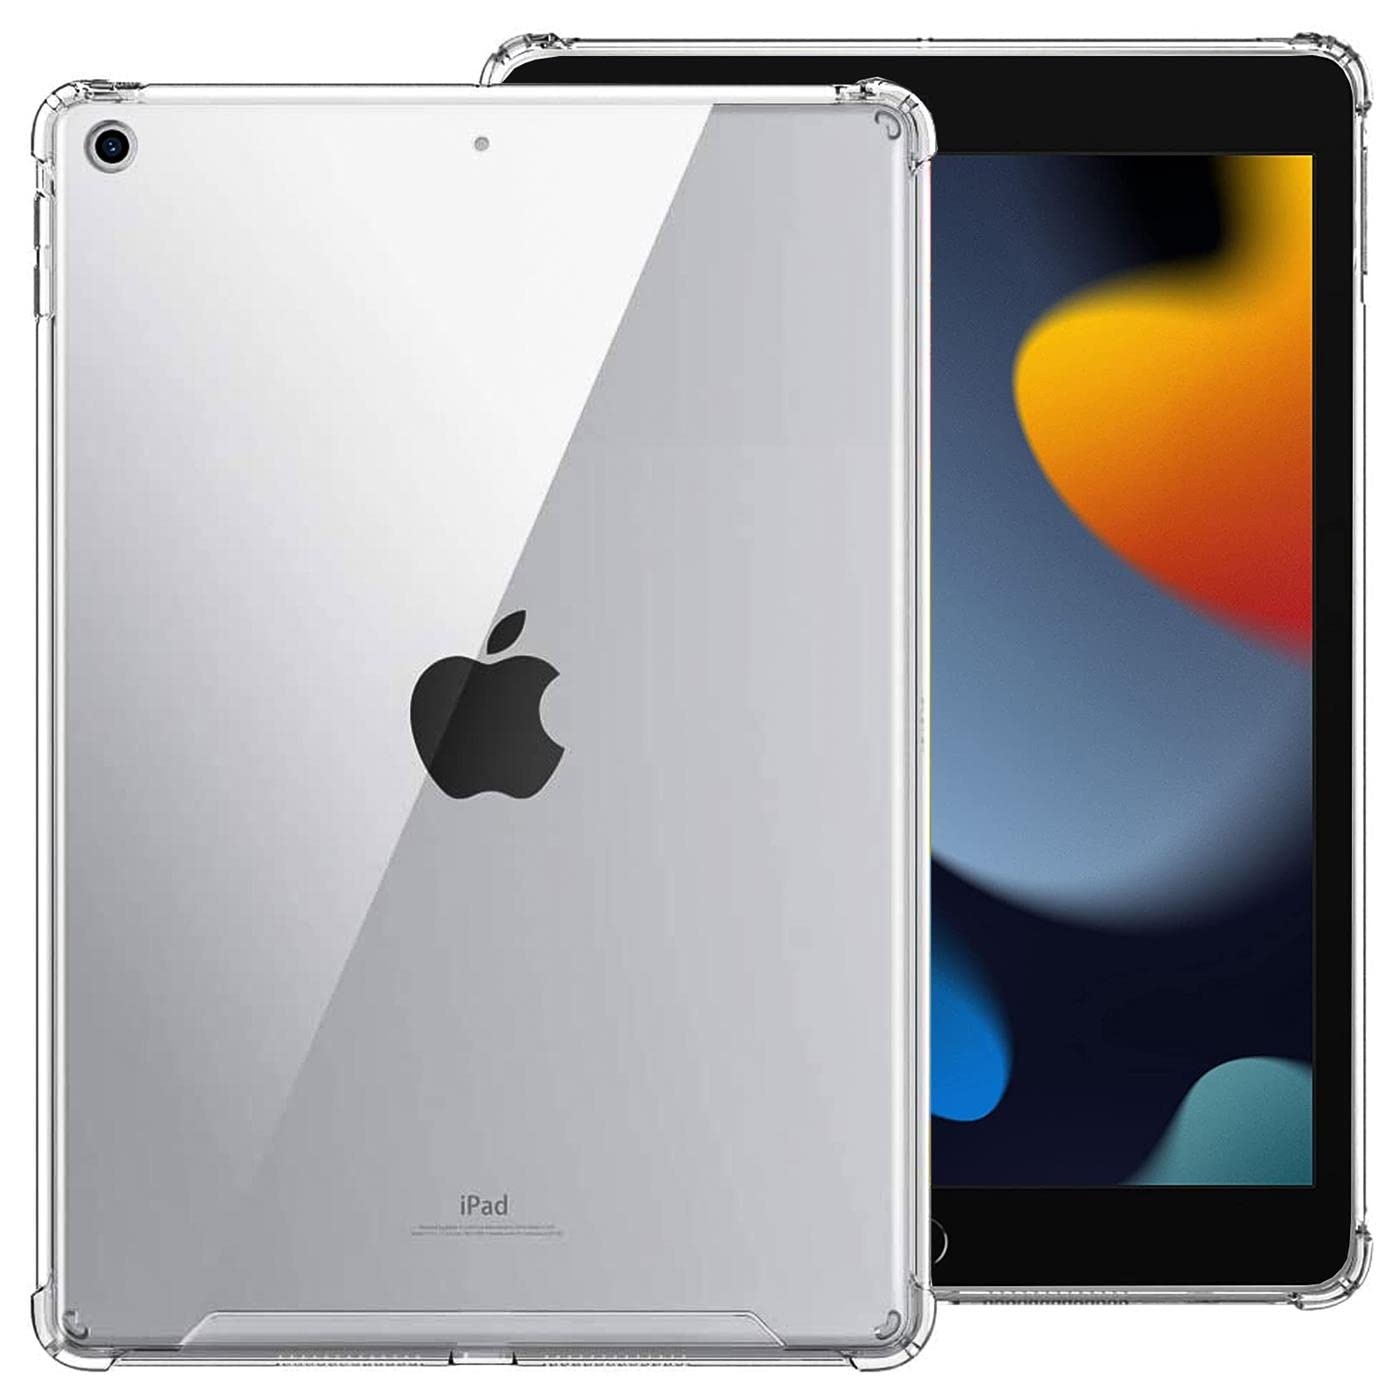 Verco ultraleichte Tablet-Hülle für iPad Mini 5 7.9 Zoll, (2019 Modell) Robustes Case verstärkter Kantenschutz Schutzhülle für Apple iPad Mini 5 Hülle Transparent